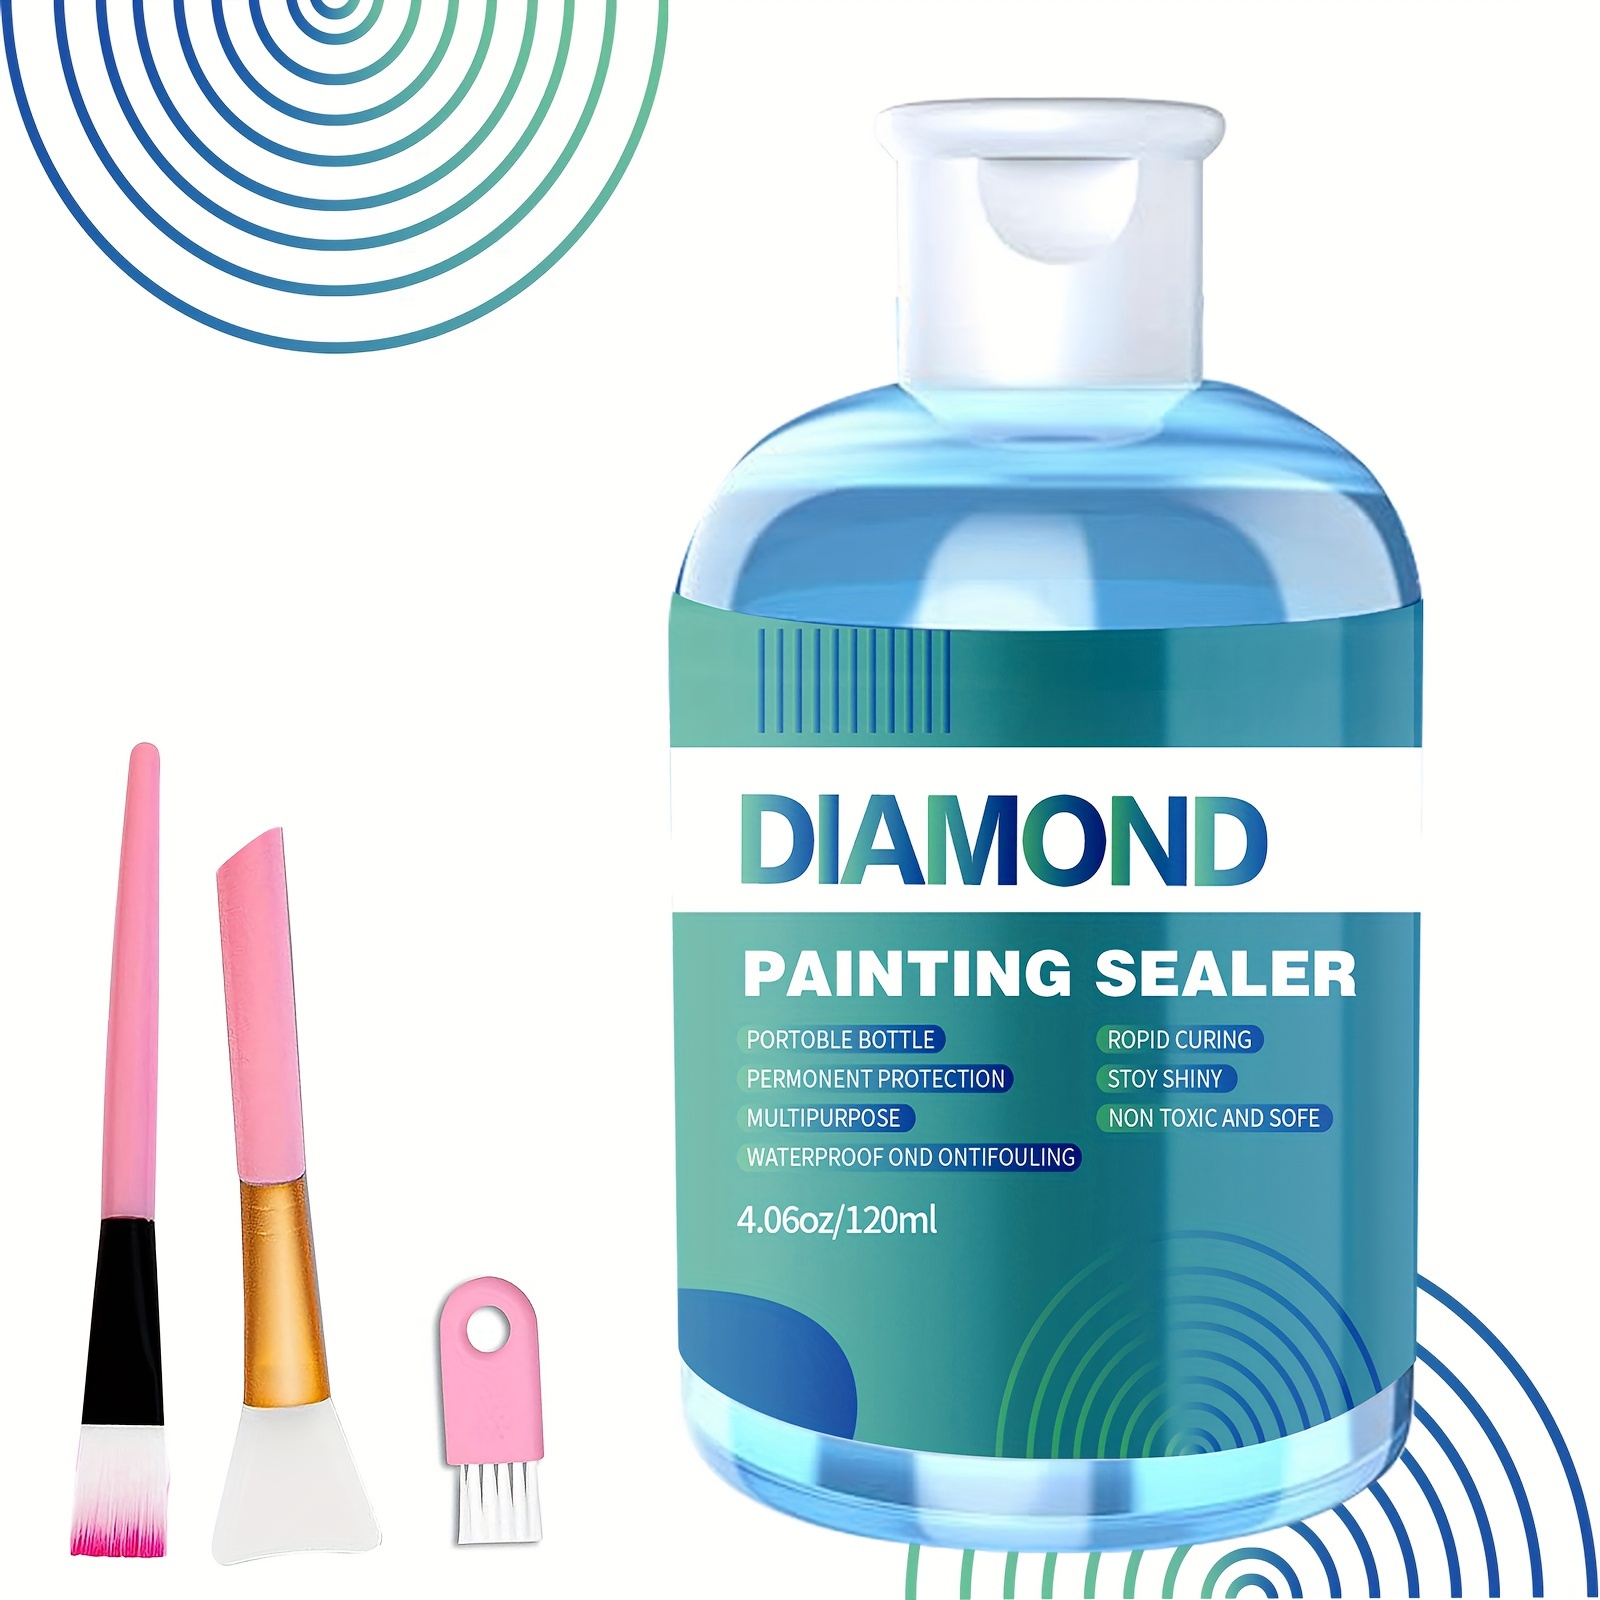 Updated Diamond Painting Sealer 200ML with Silicone Brush 2 Packs